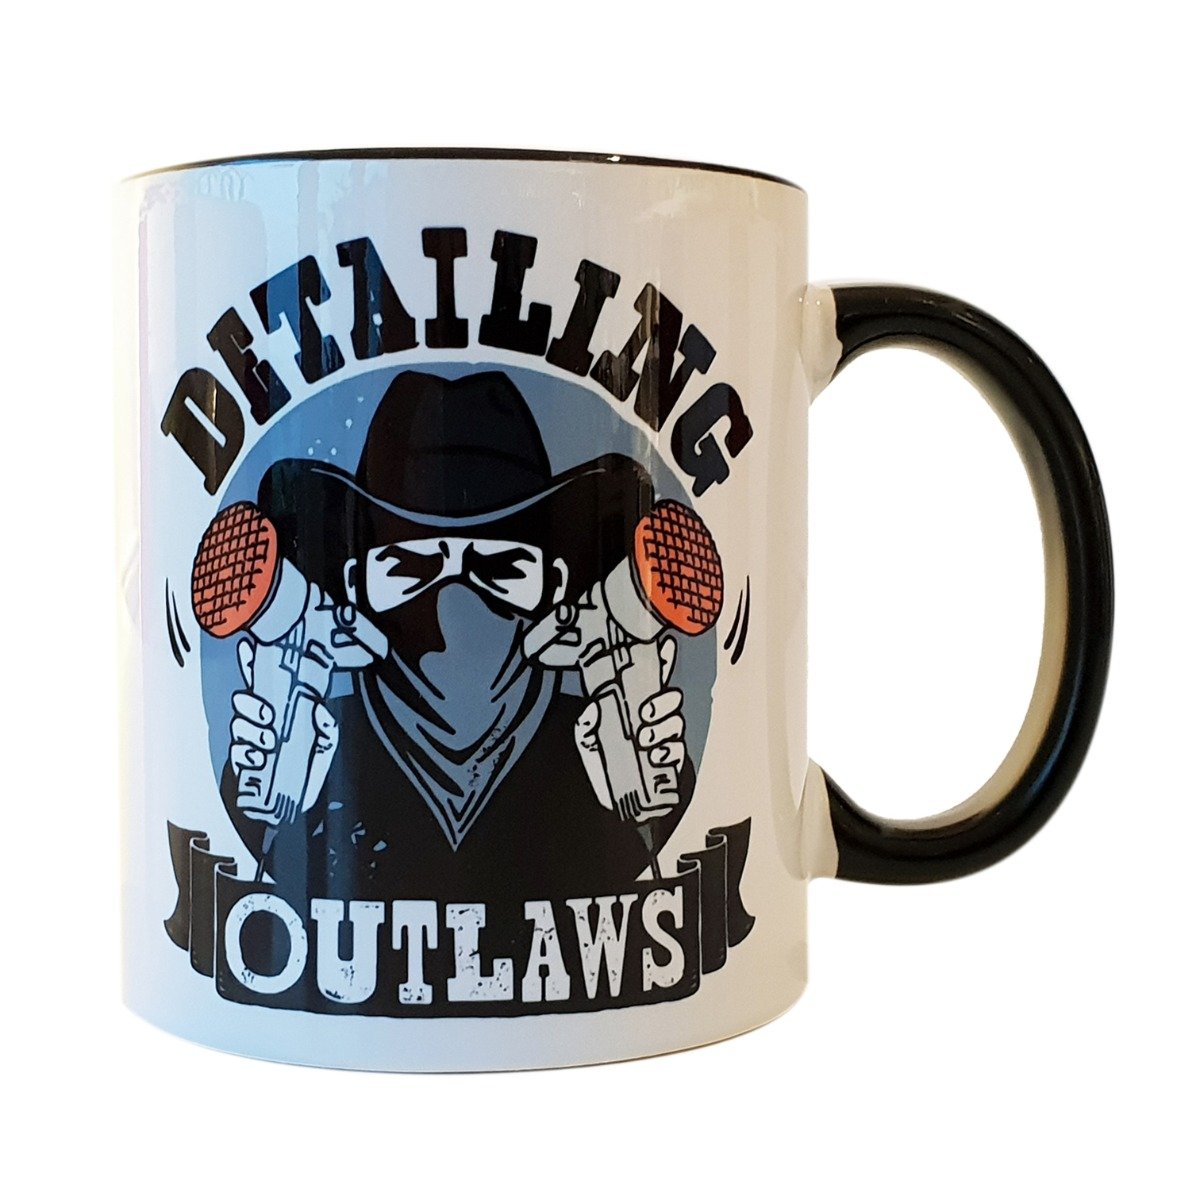 Detailing Outlaws Mok